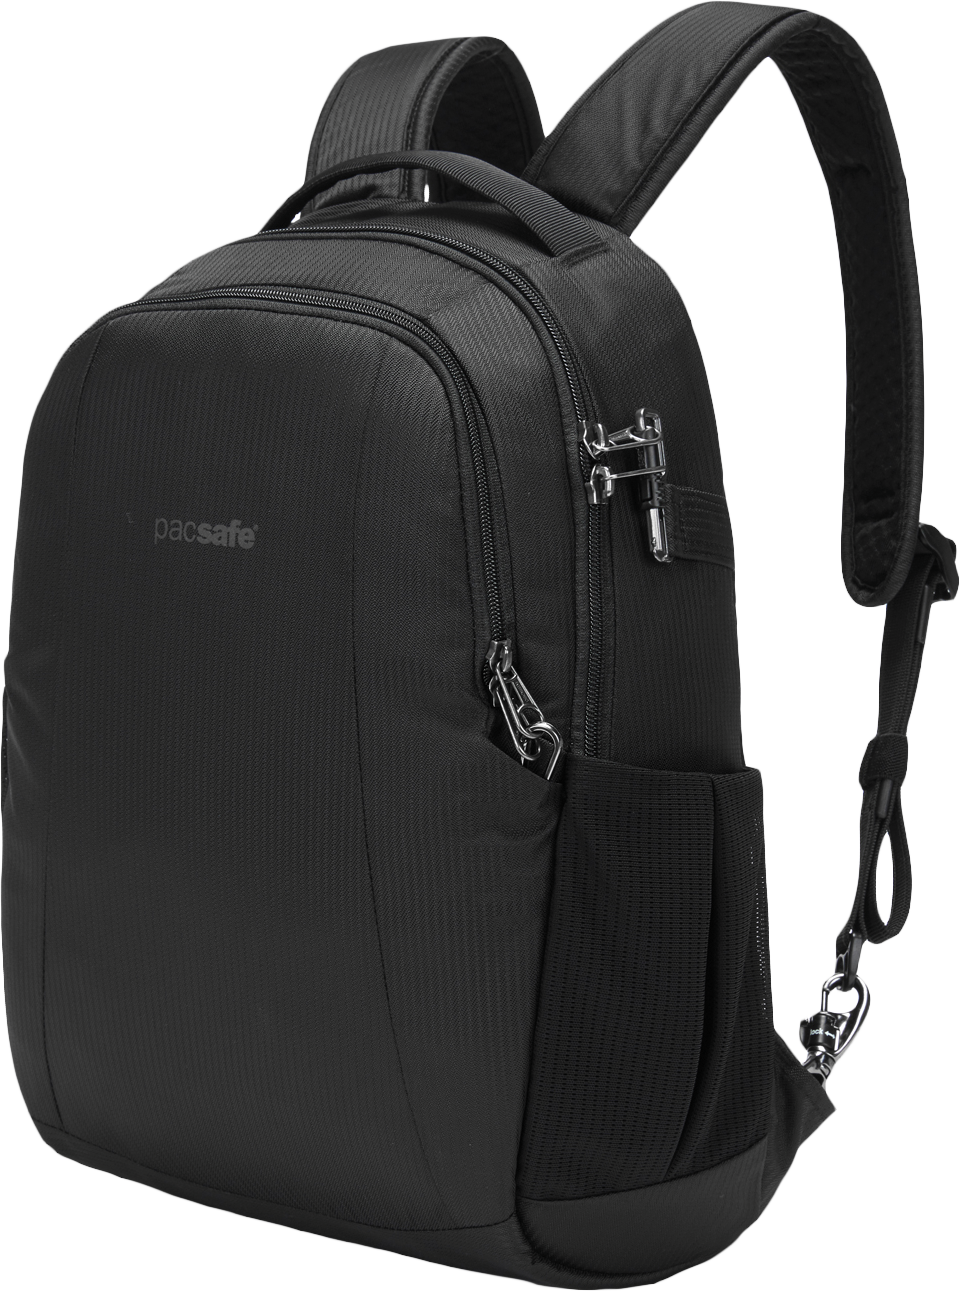 Pacsafe Metrosafe LS350 Econyl Anti-Theft Backpack